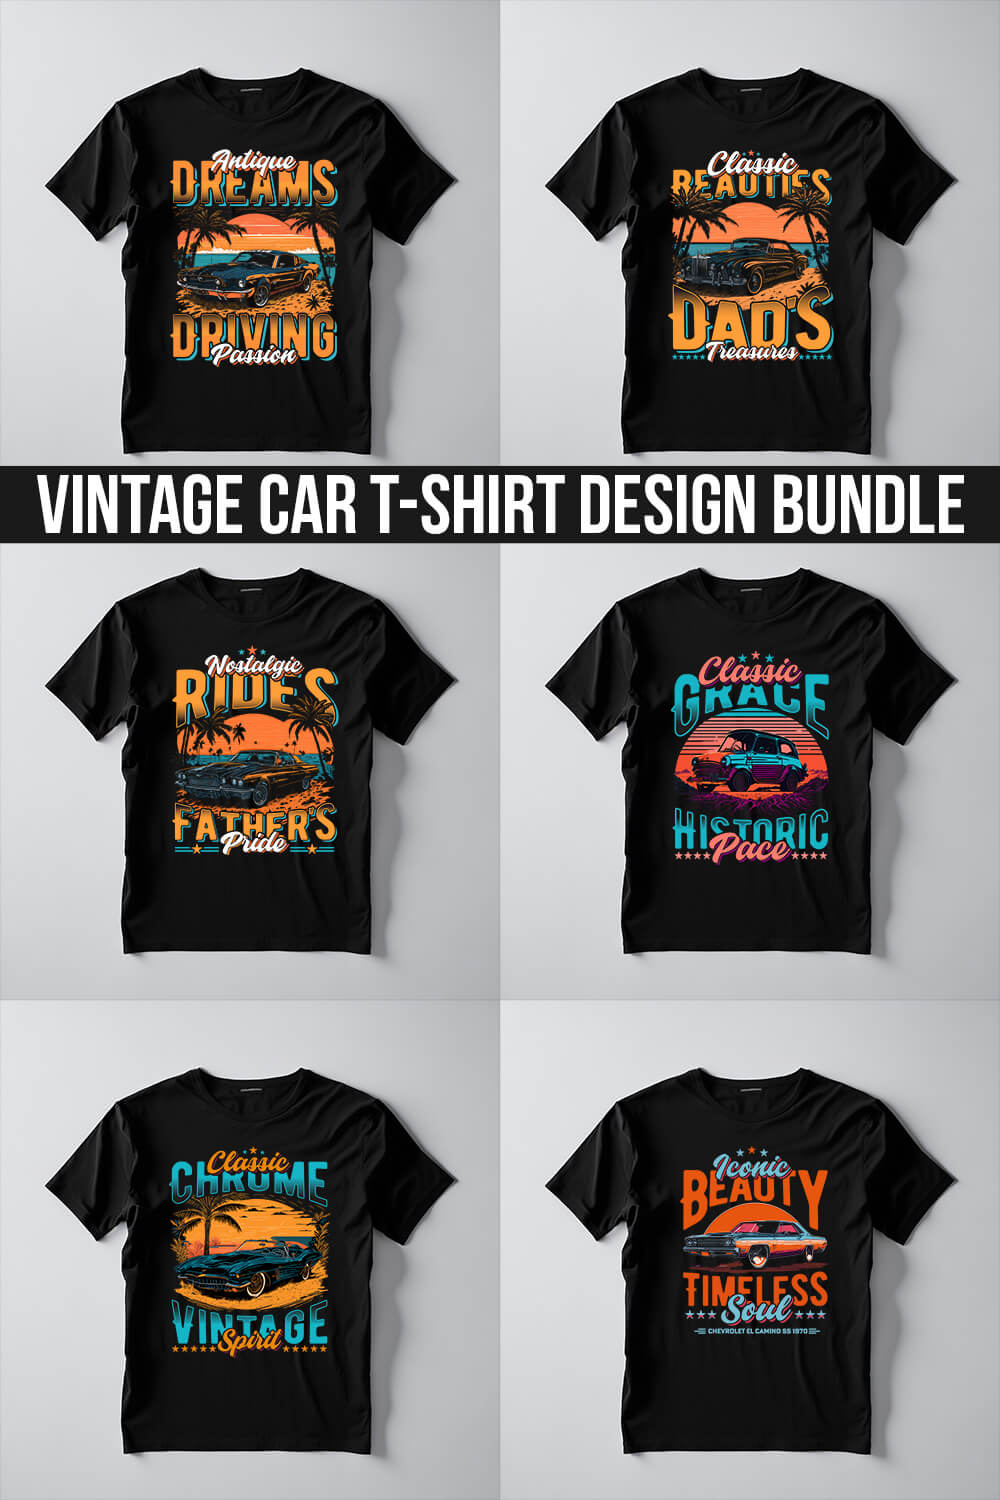 Vintage Legends Of The Road: The Best Classic Car T-shirt Design Vector Bundle pinterest preview image.